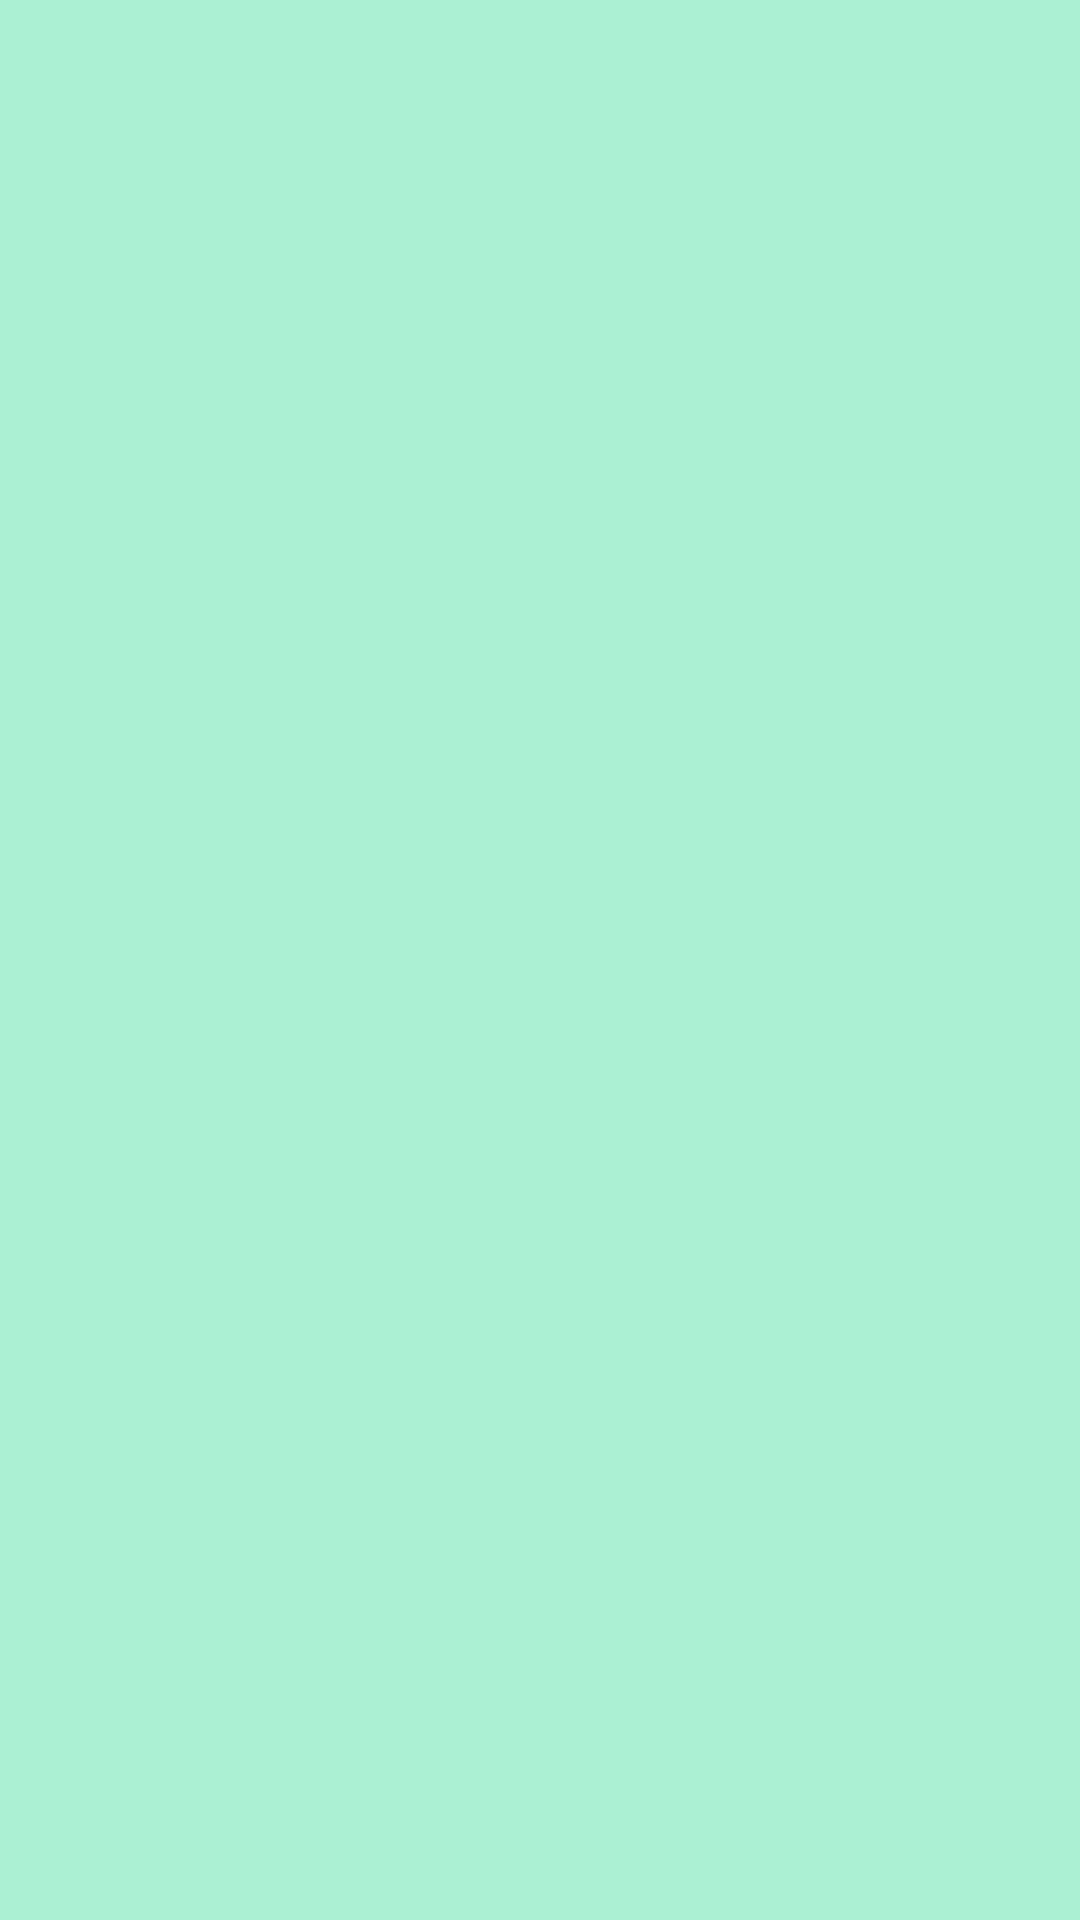 pastel mint green background